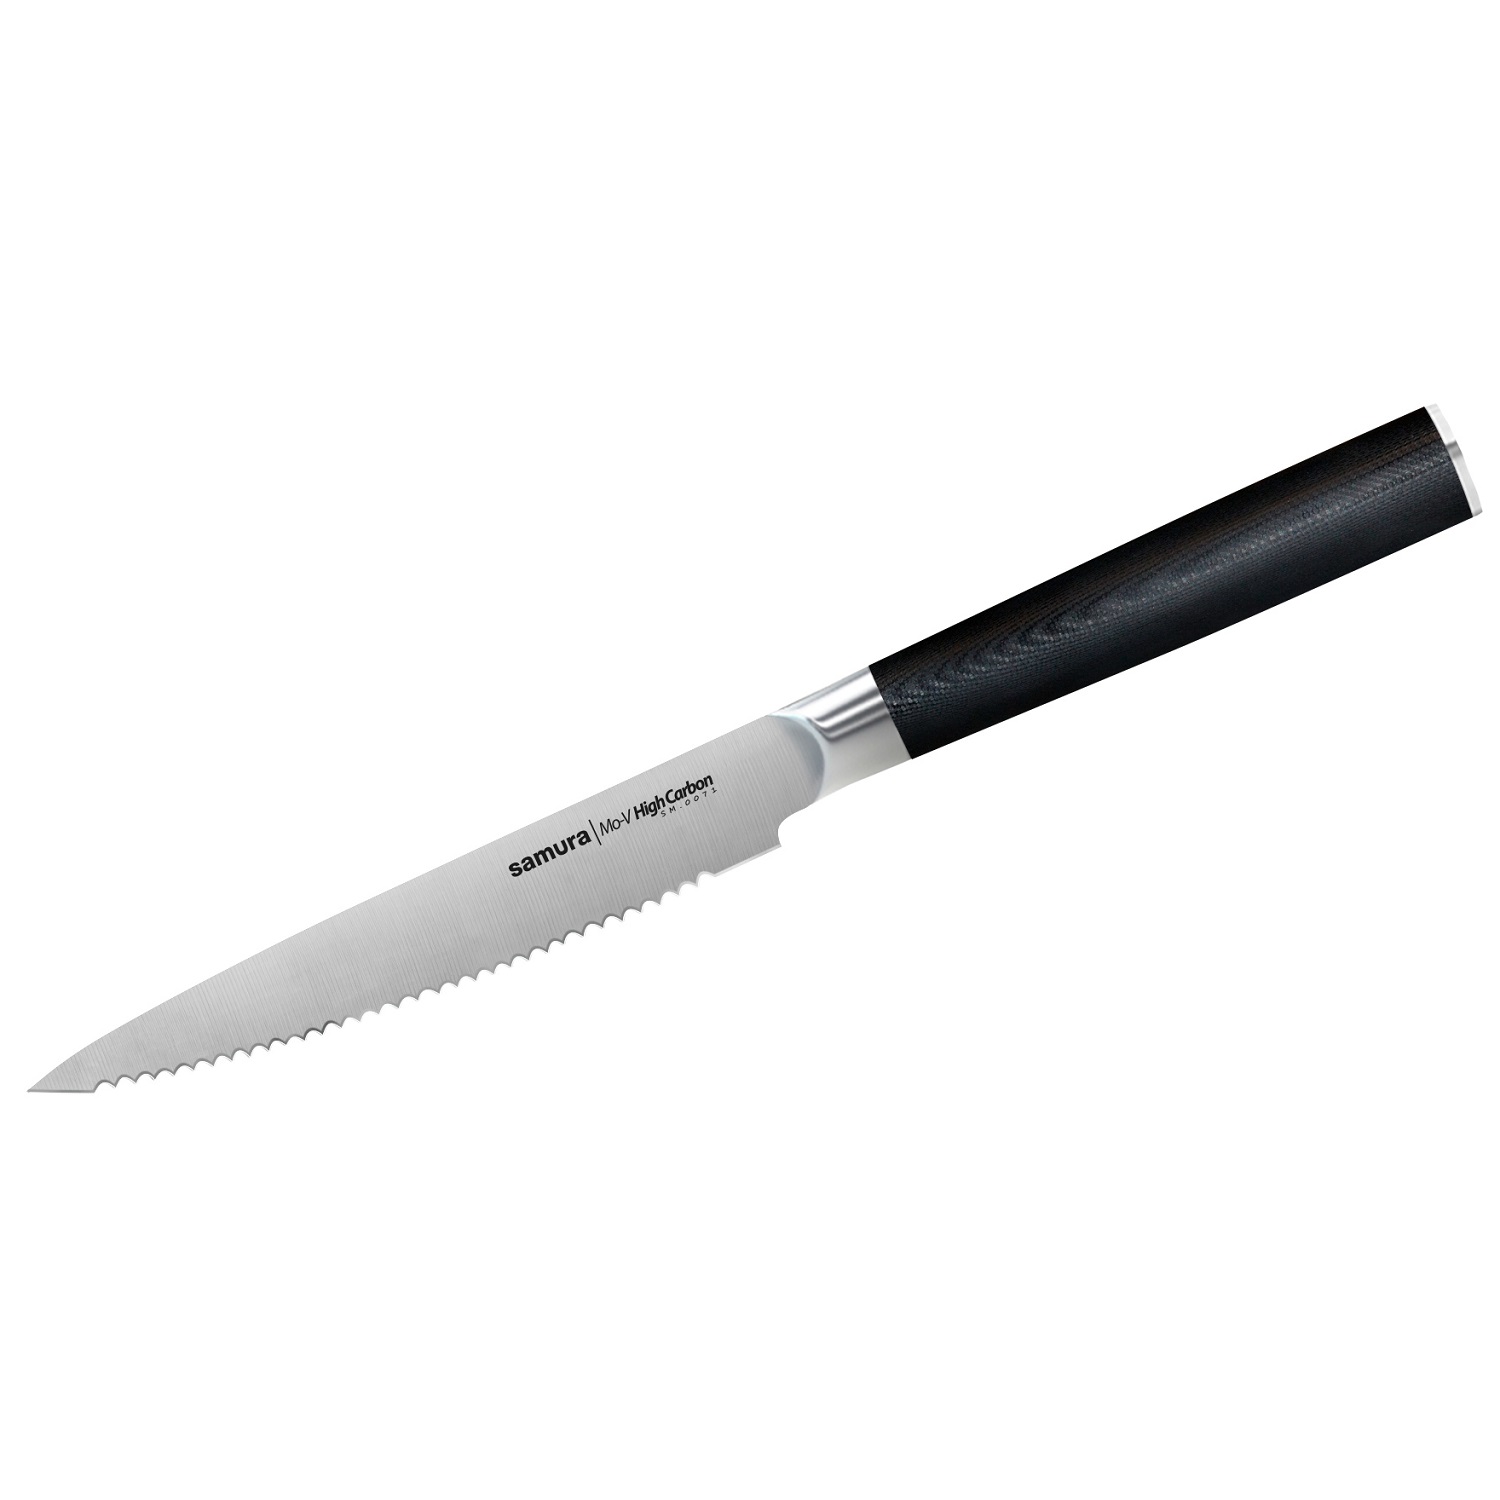 Нож Samura для томатов Mo-V, 12 см, G-10 нож для овощей mo v 9 см sm 0010 k samura